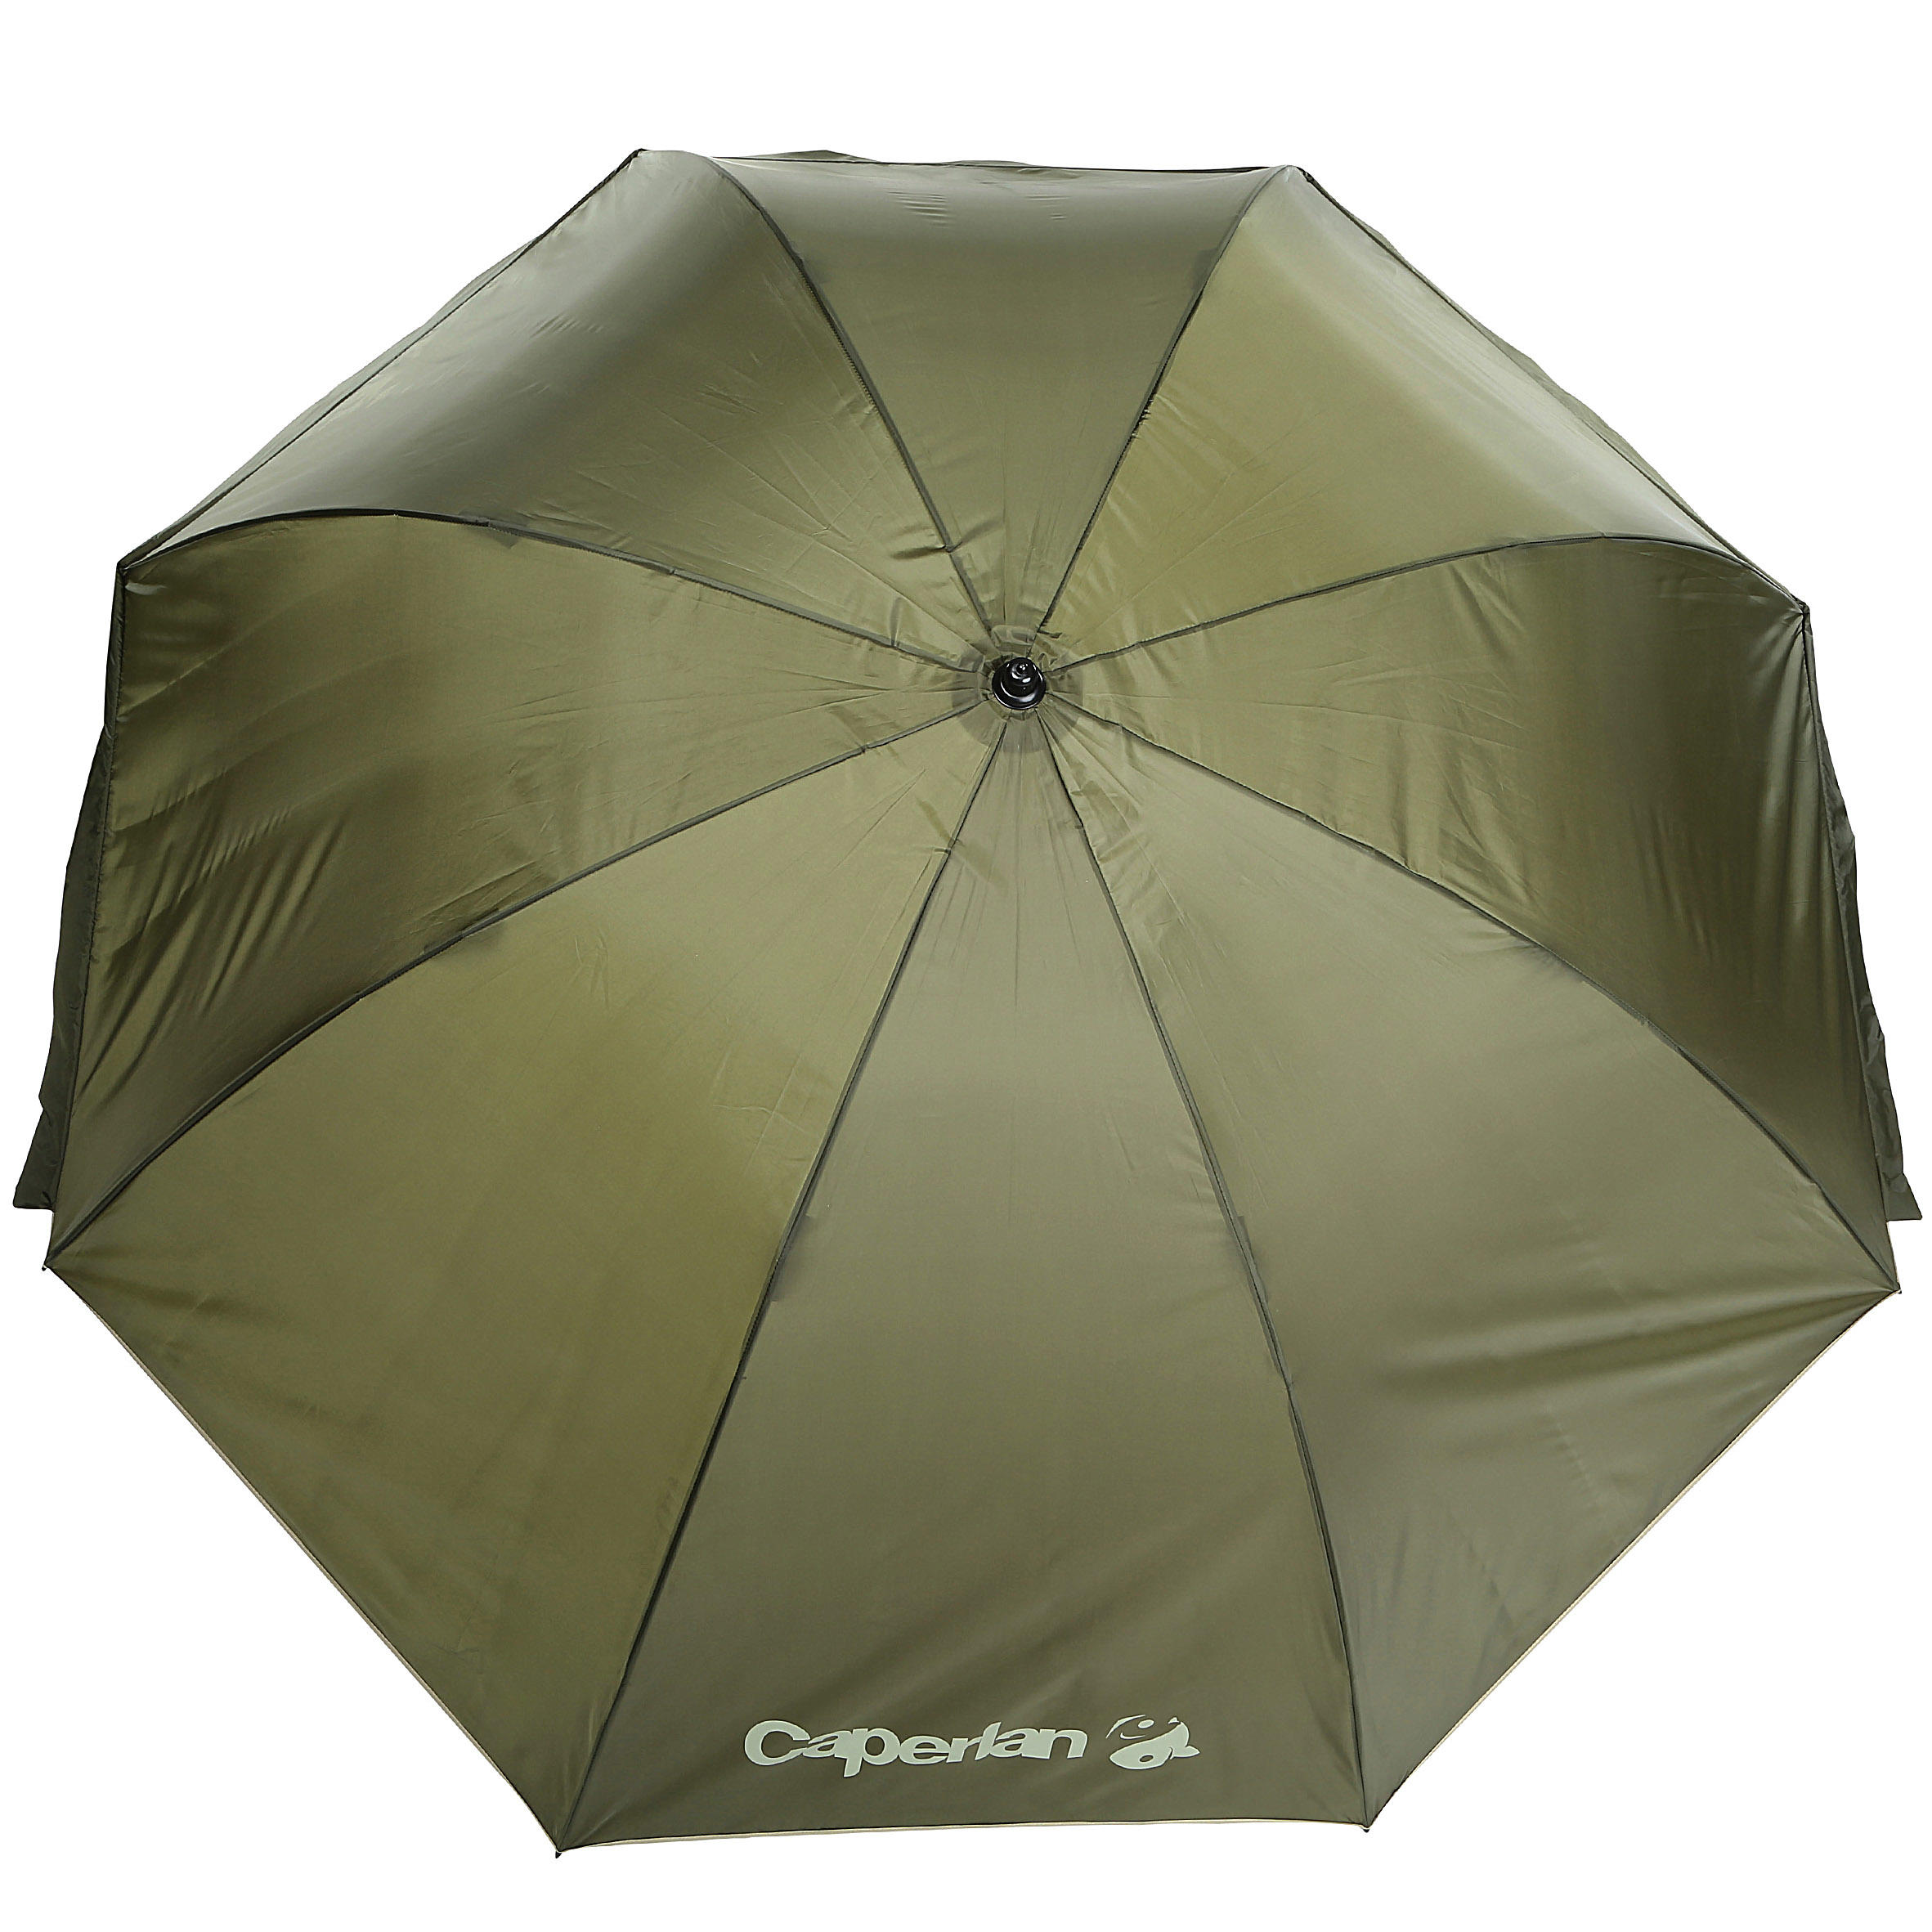 Fishing umbrella Size XL - Ash khaki green - Caperlan - Decathlon